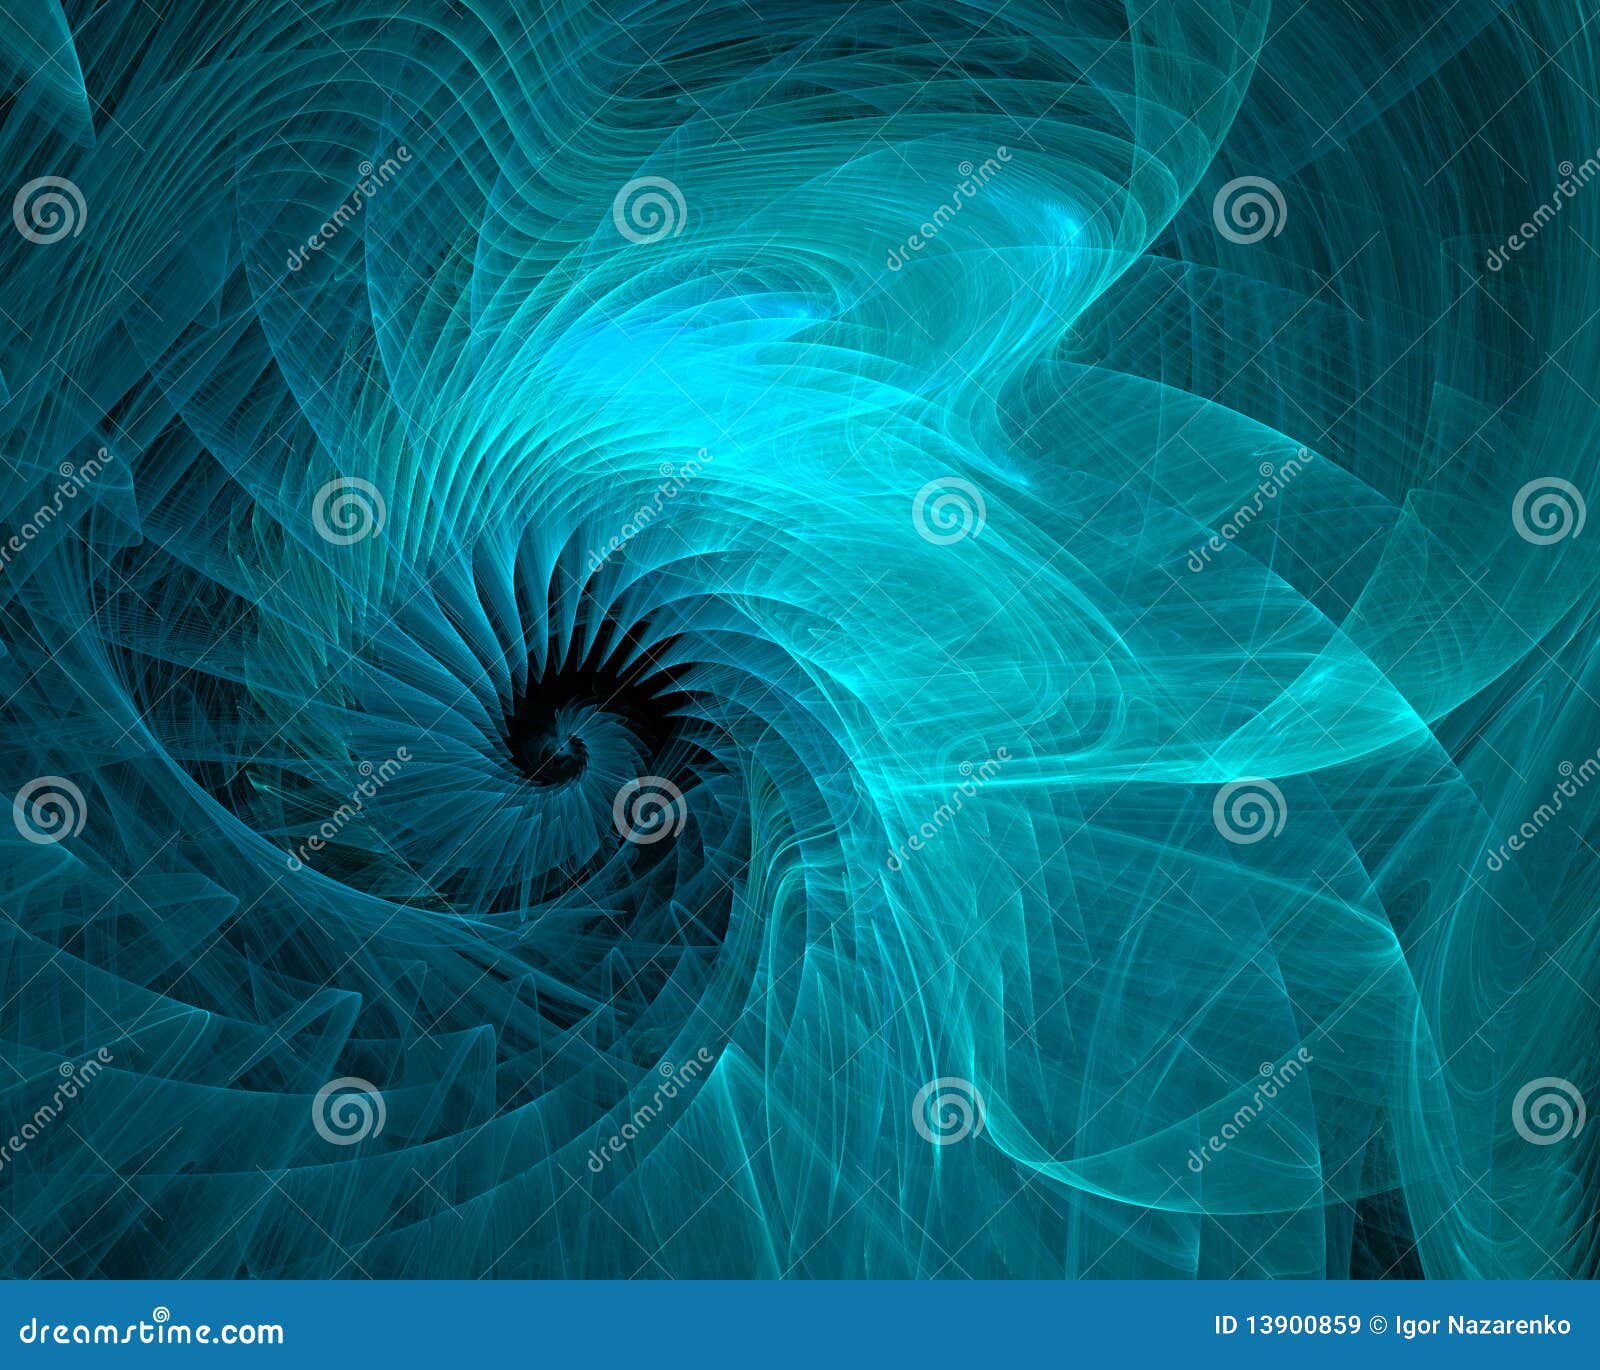 abstract aquamarine spiral